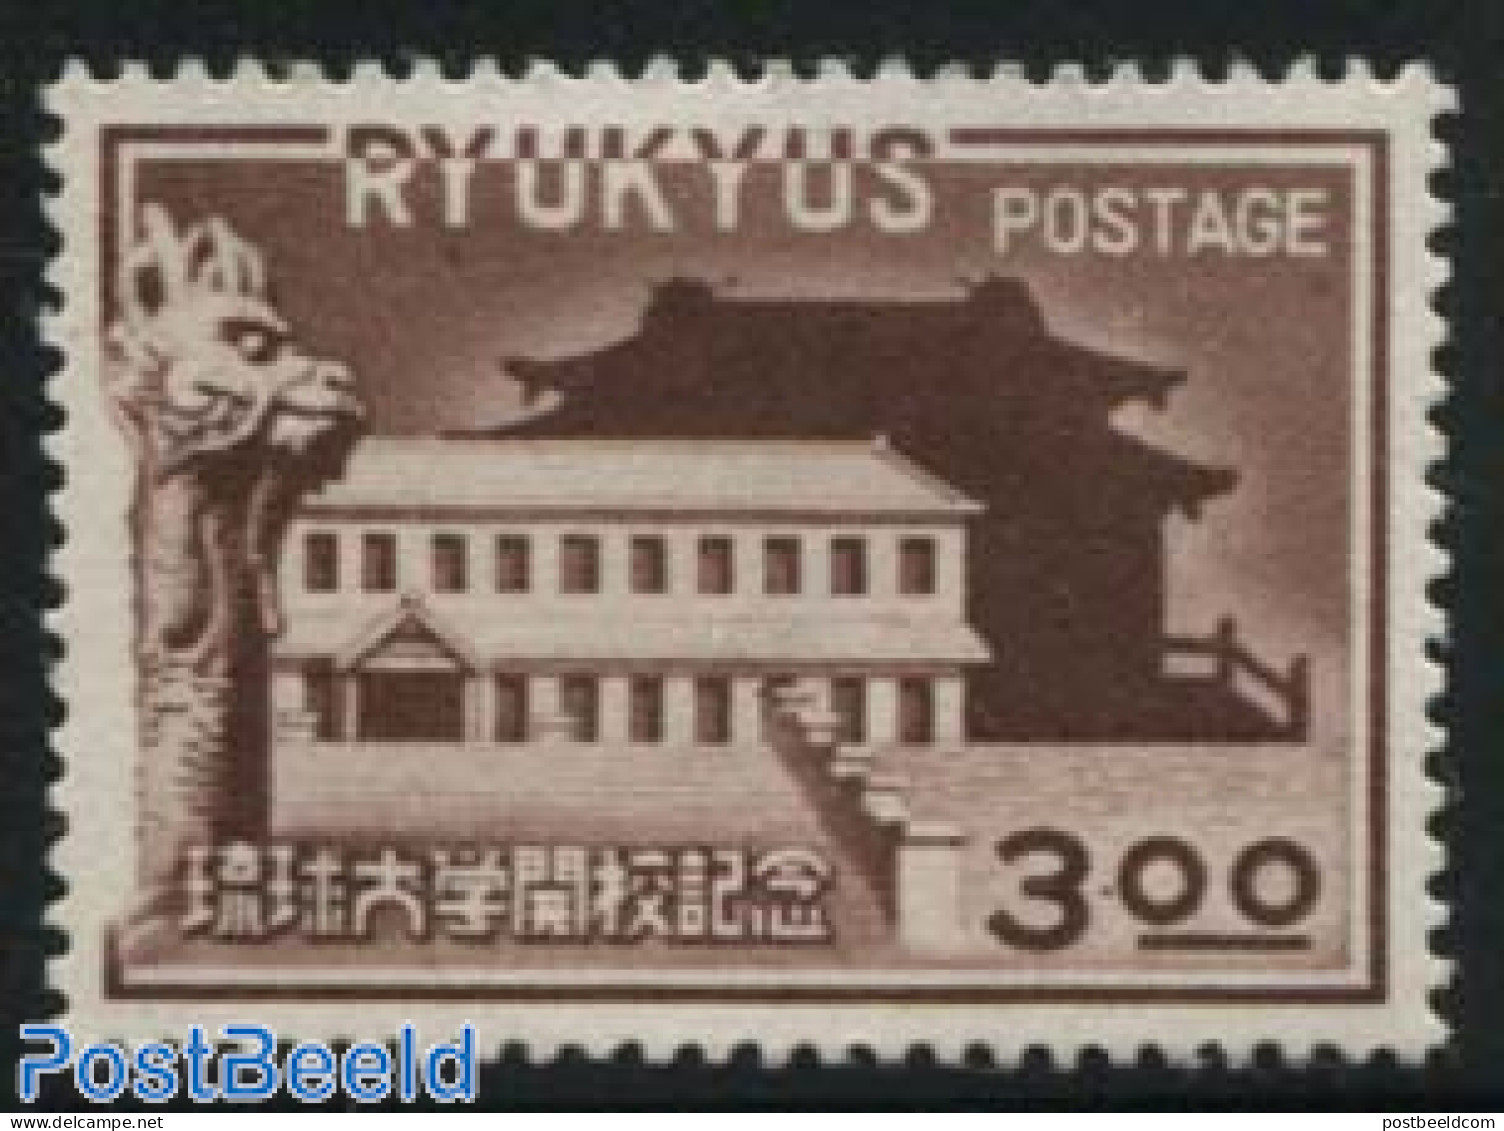 Ryu-Kyu 1951 University 1v, Unused (hinged), Science - Education - Ryukyu Islands